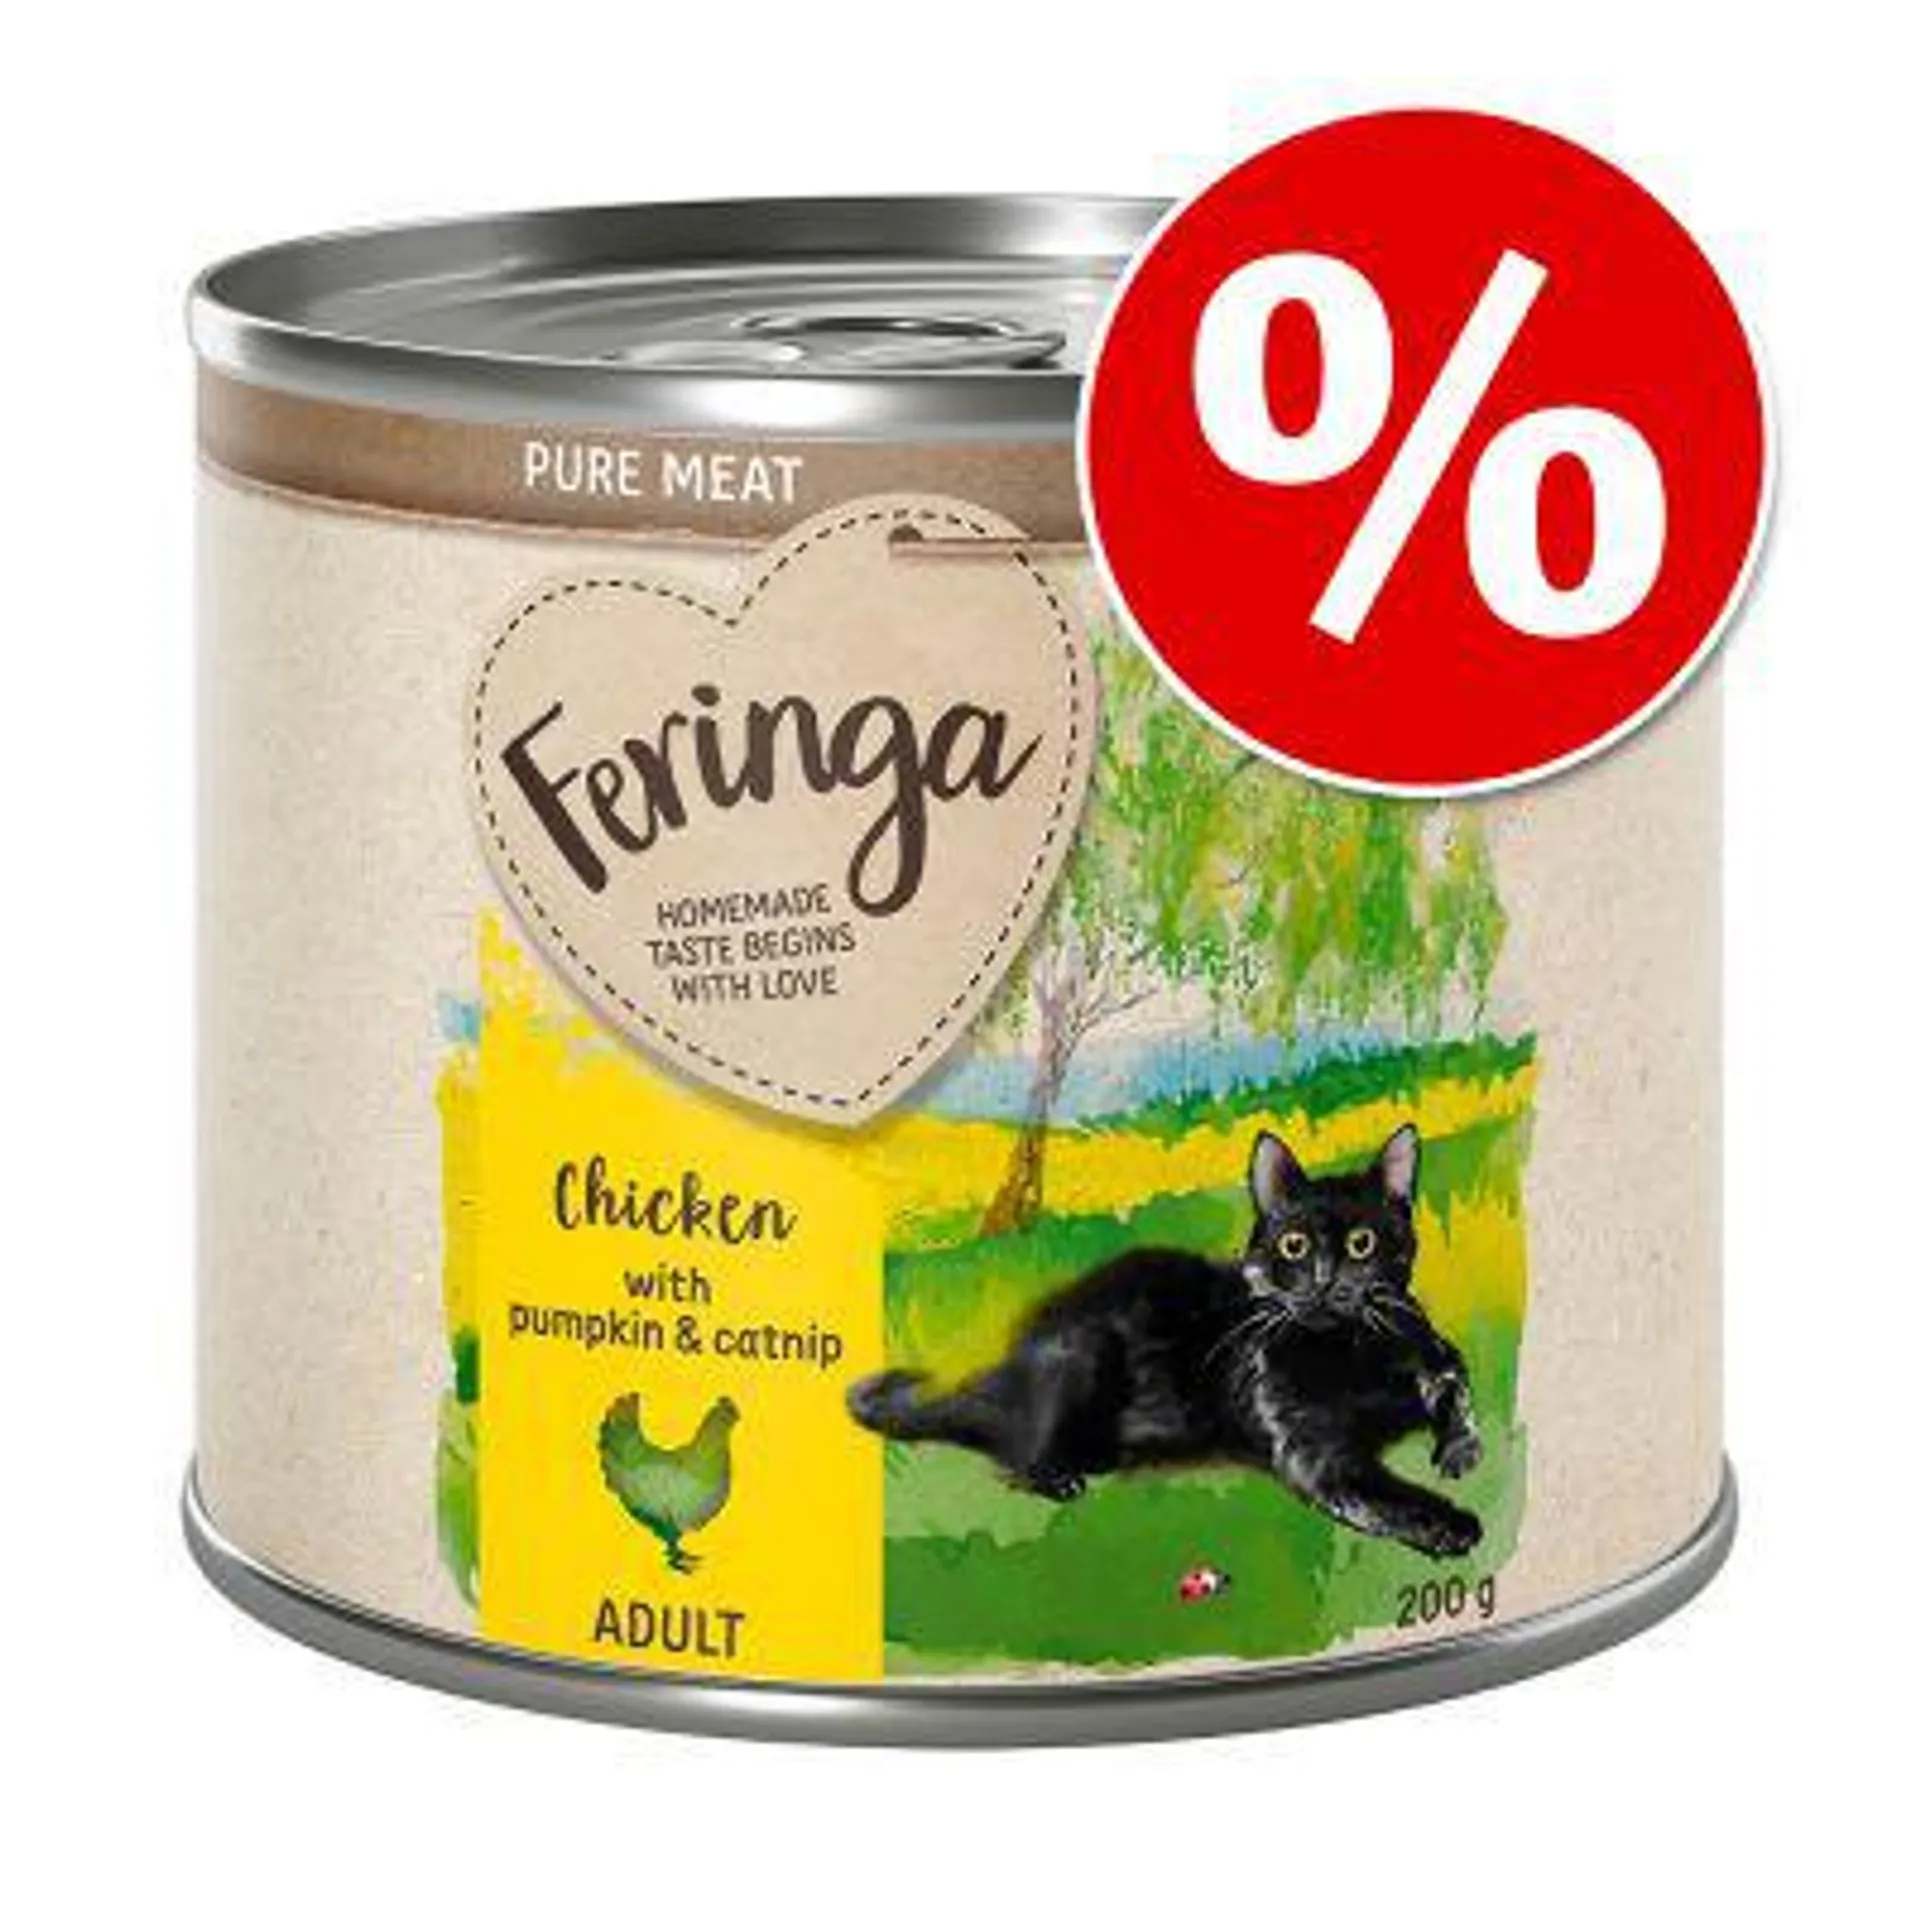 12 x 200g Feringa Pure Meat Menu Wet Cat Food - Special Price!*